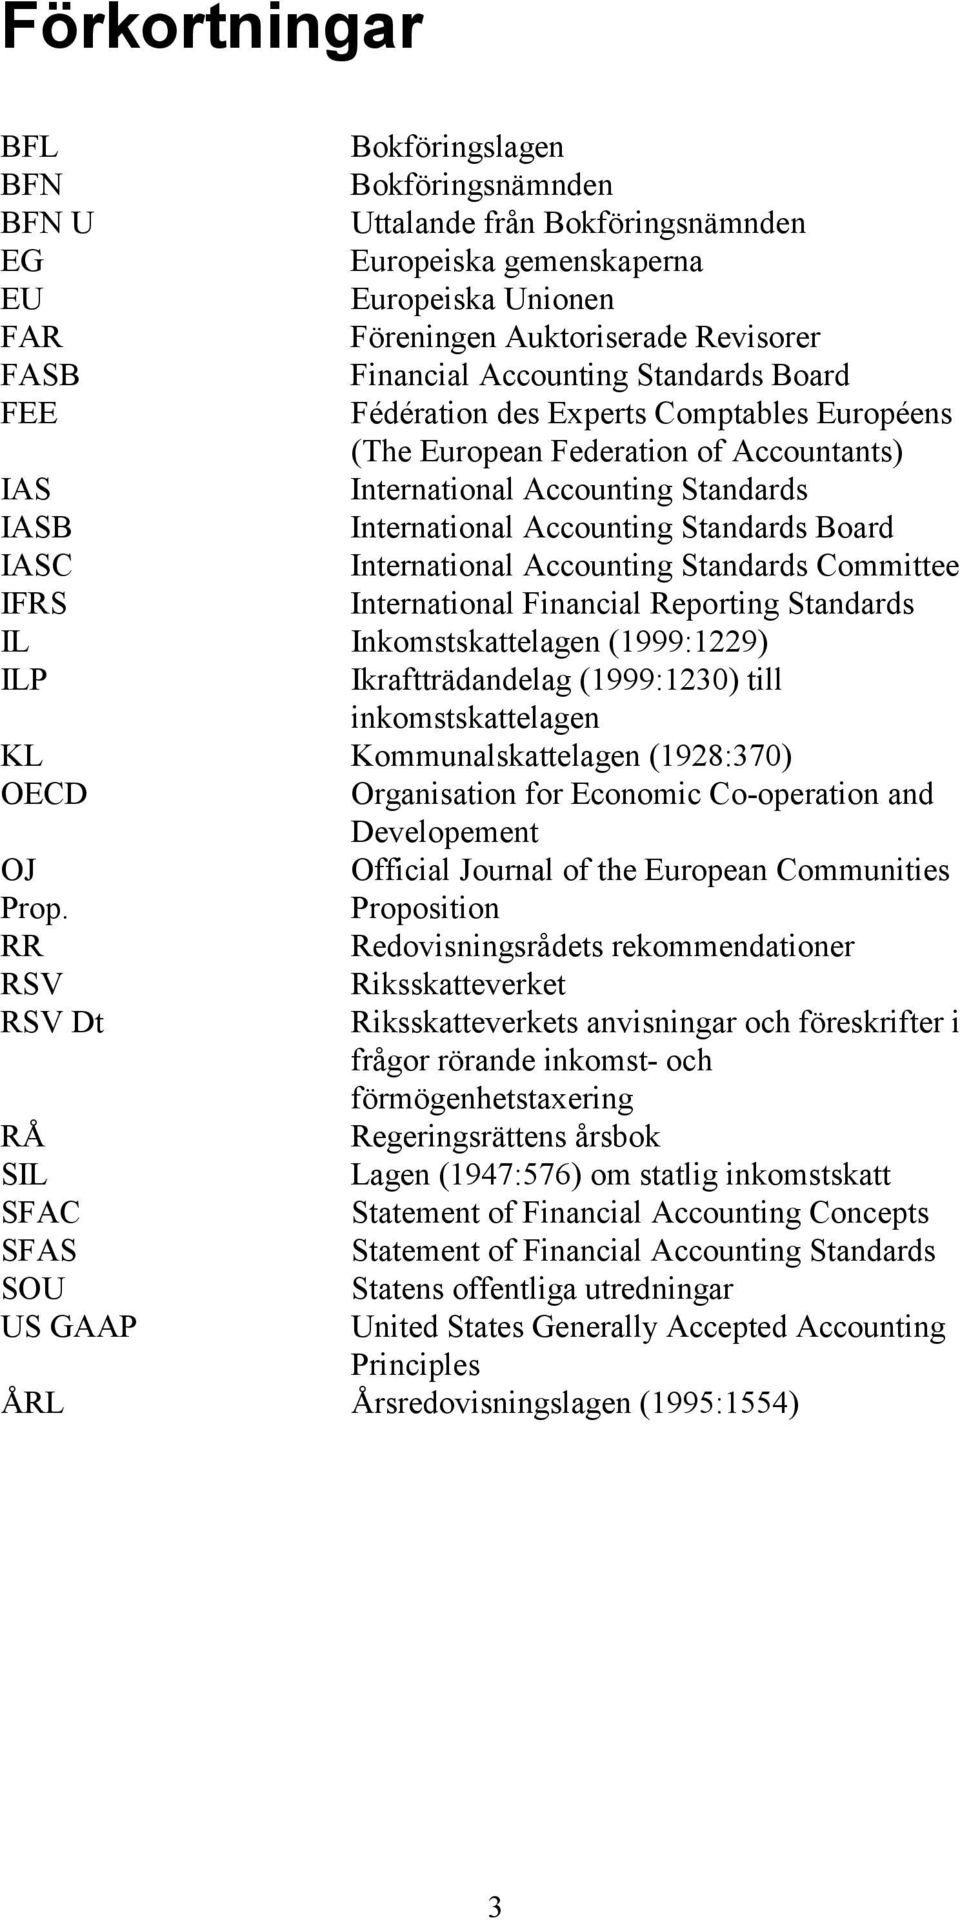 Board IASC International Accounting Standards Committee IFRS International Financial Reporting Standards IL Inkomstskattelagen (1999:1229) ILP Ikraftträdandelag (1999:1230) till inkomstskattelagen KL